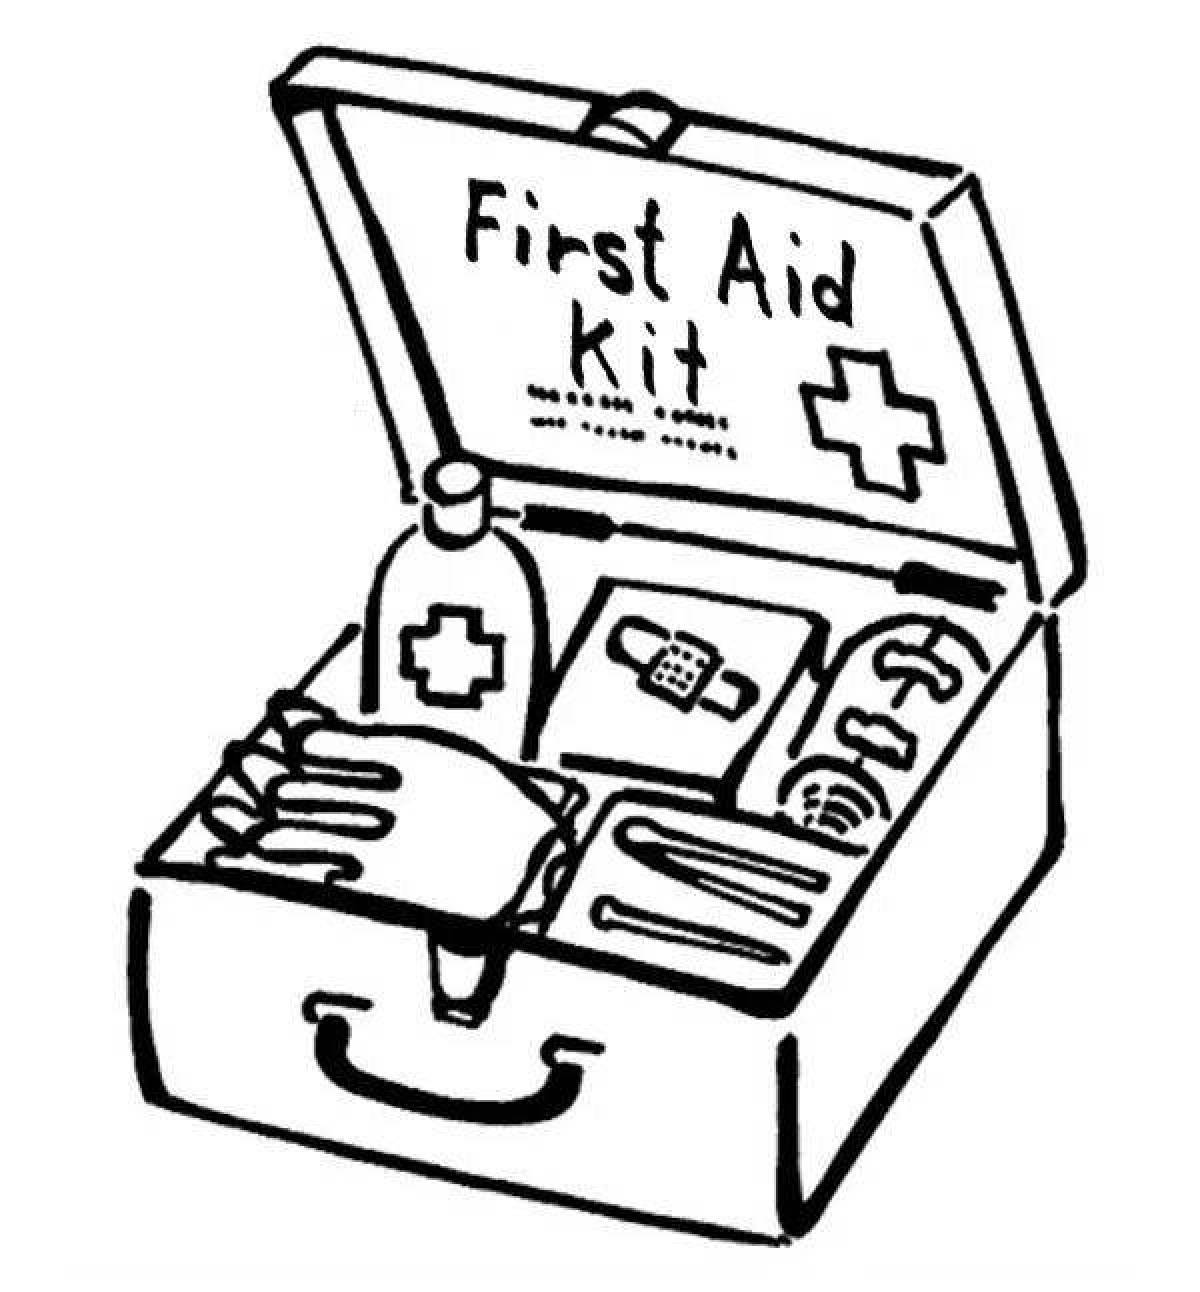 Fun first aid kit coloring book